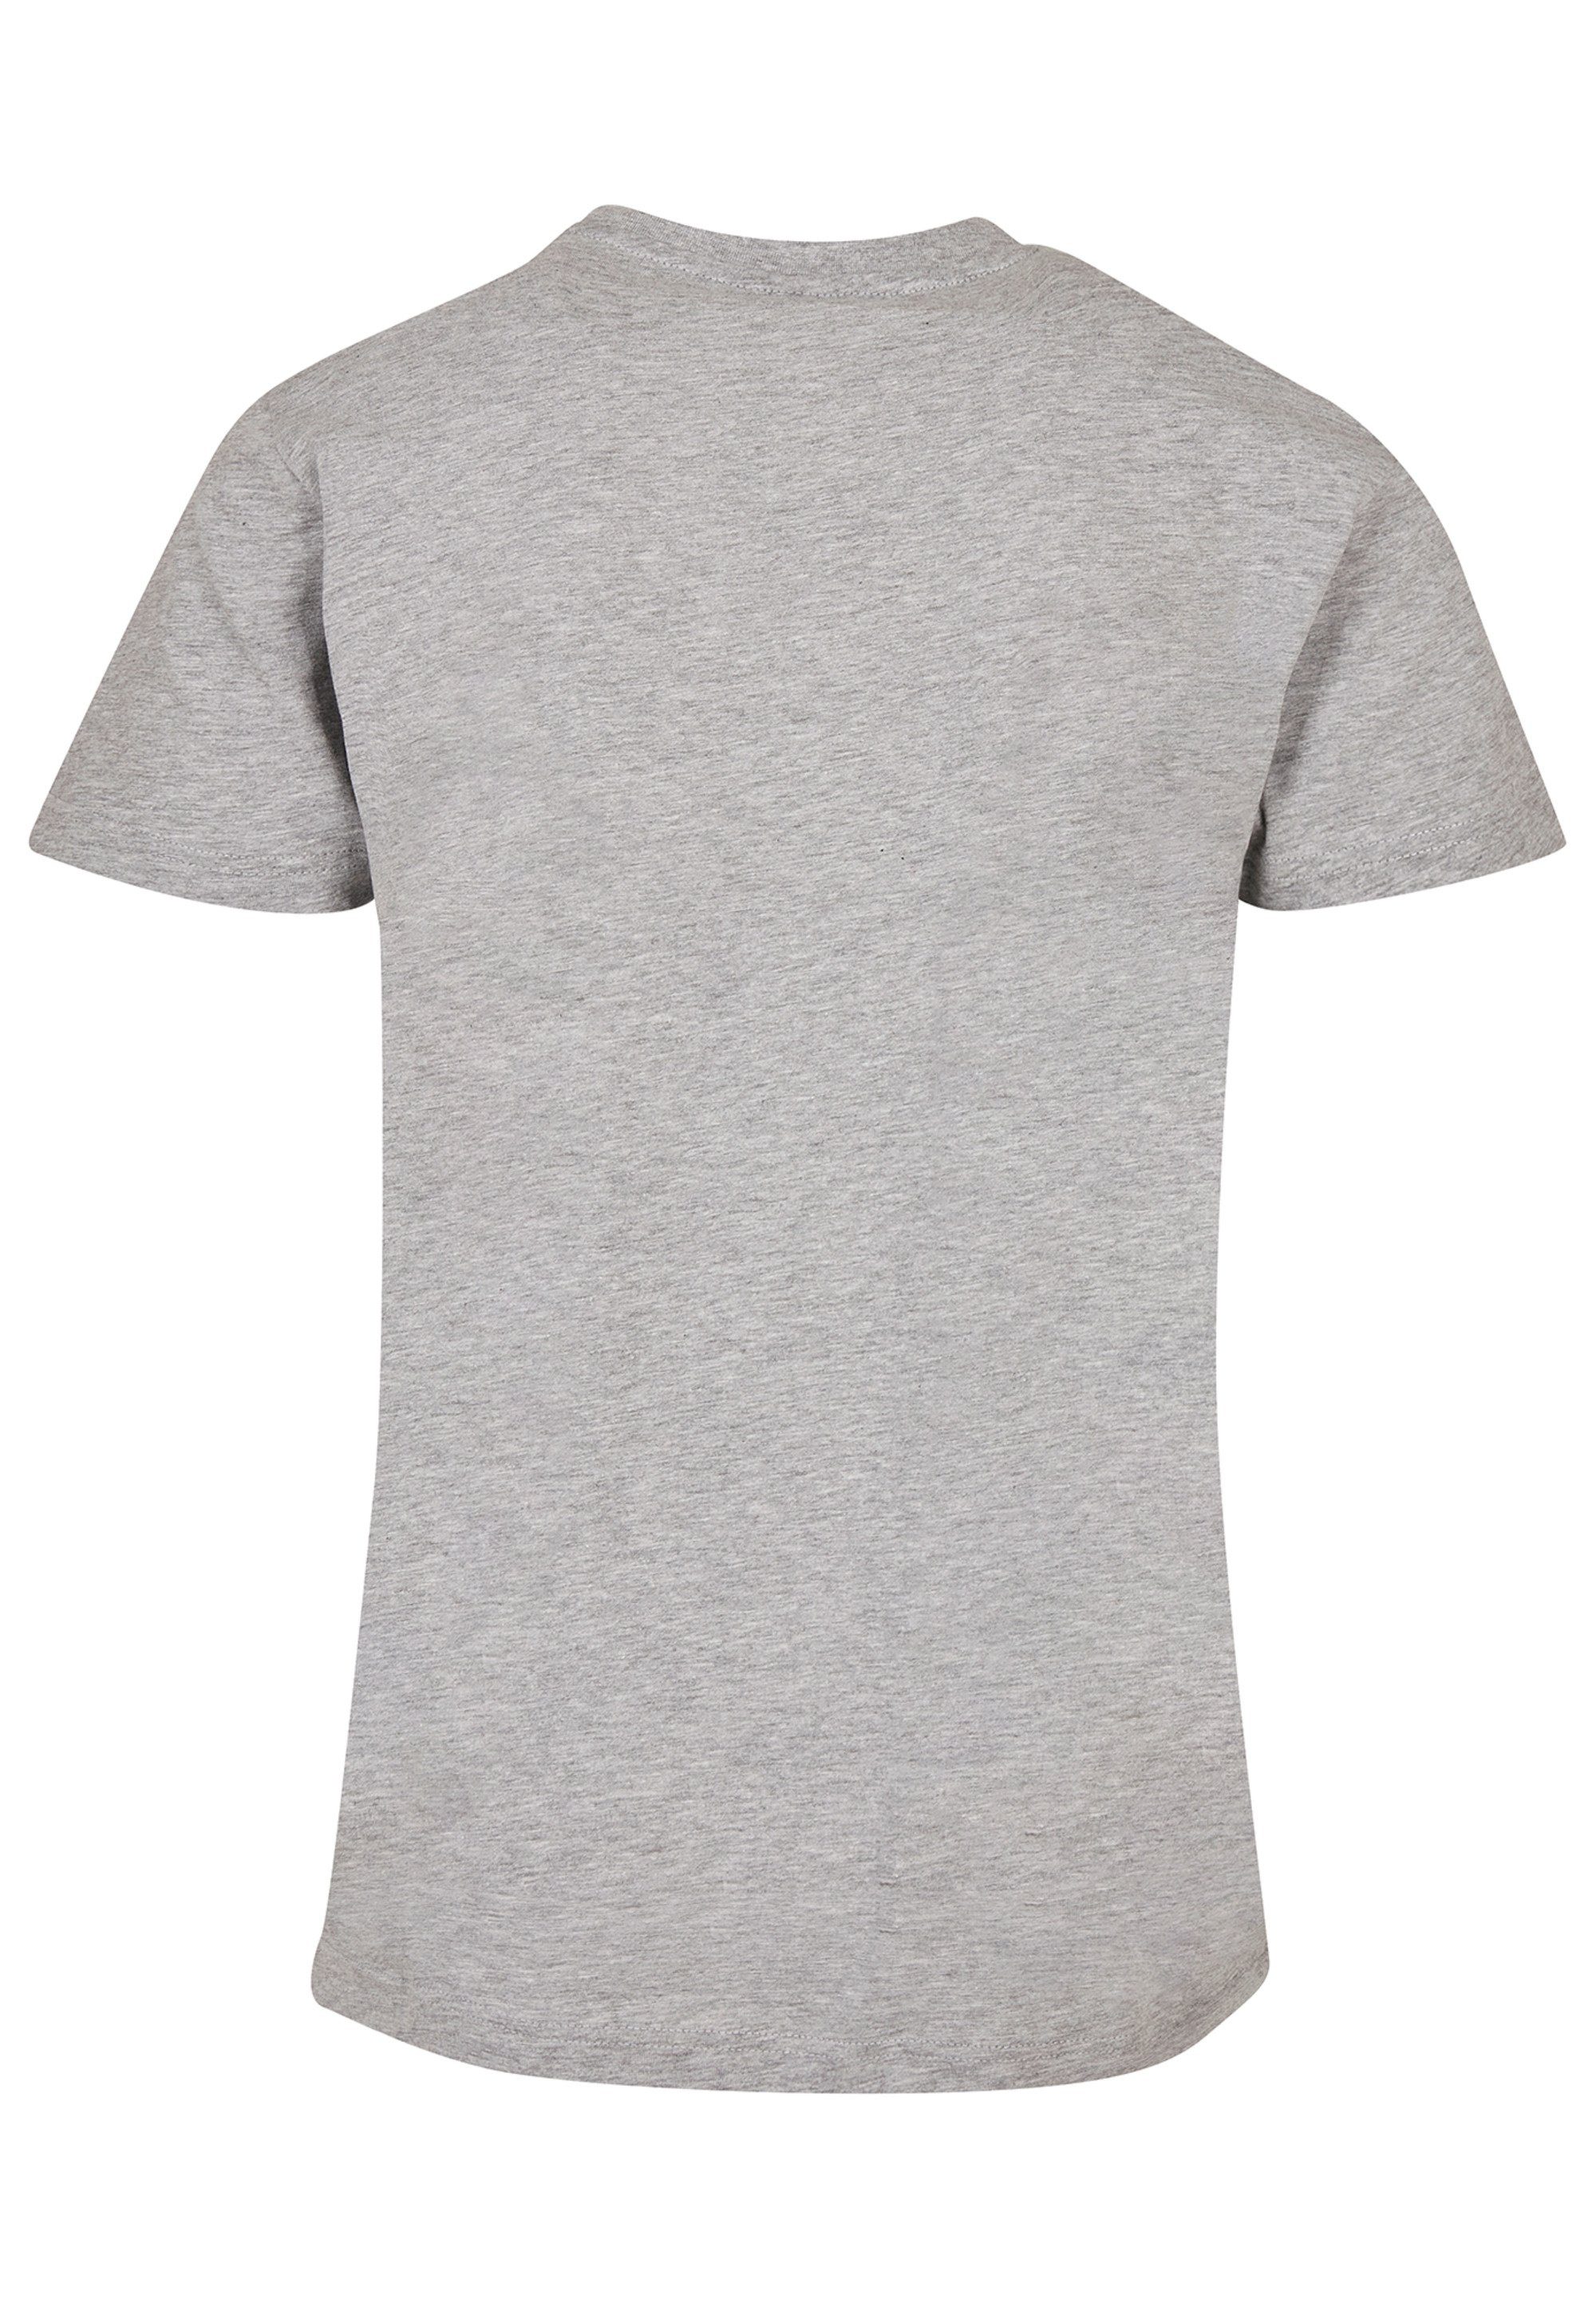 F4NT4STIC T-Shirt Black grey Sheep Print heather